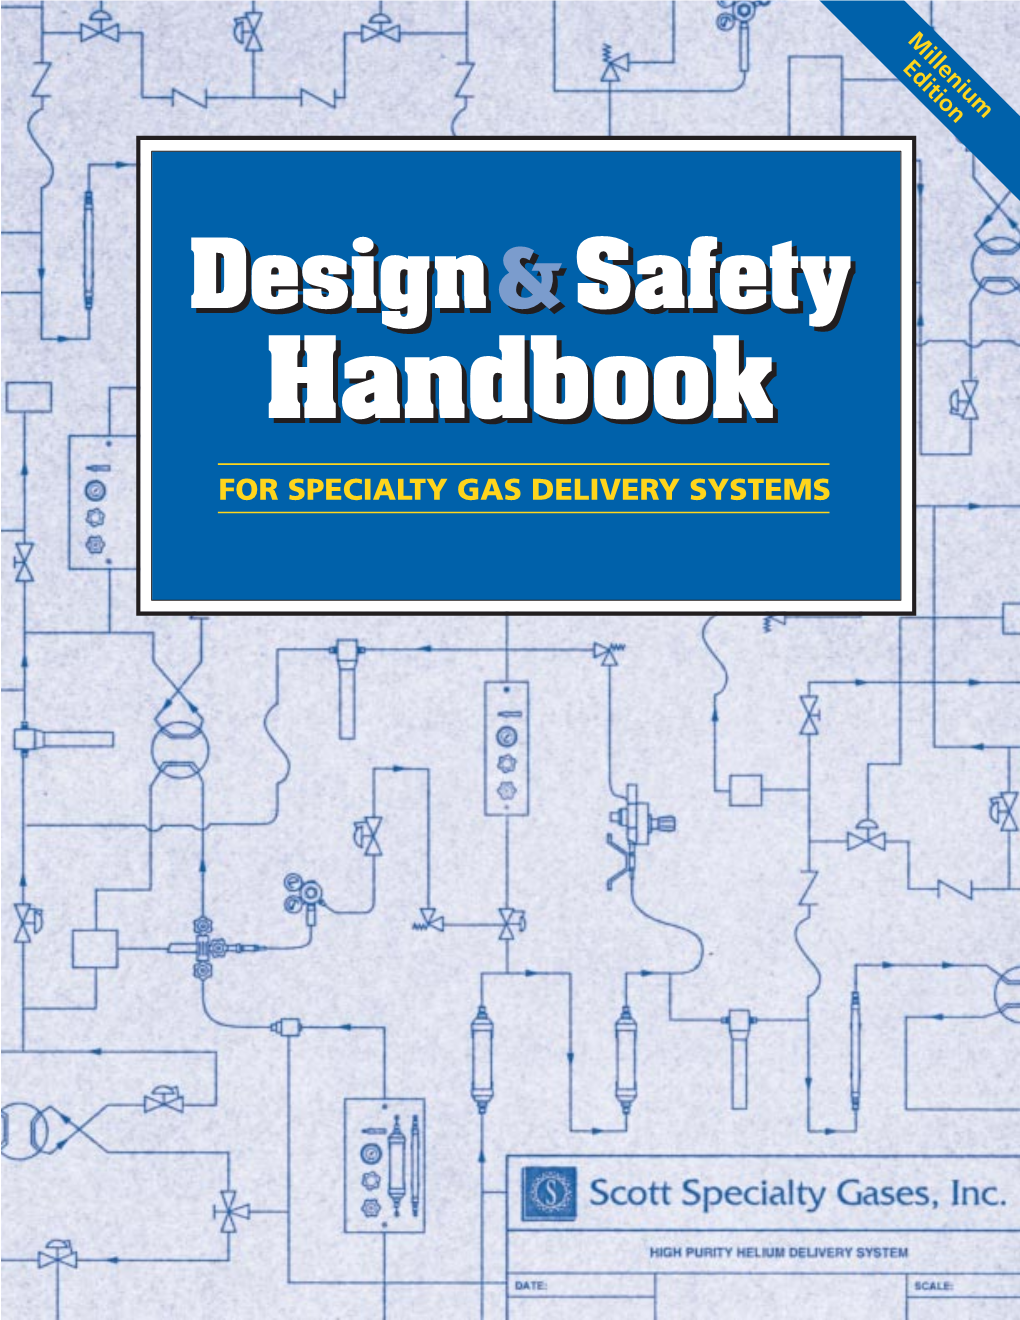 Safety and Design Handbook [Pdf]